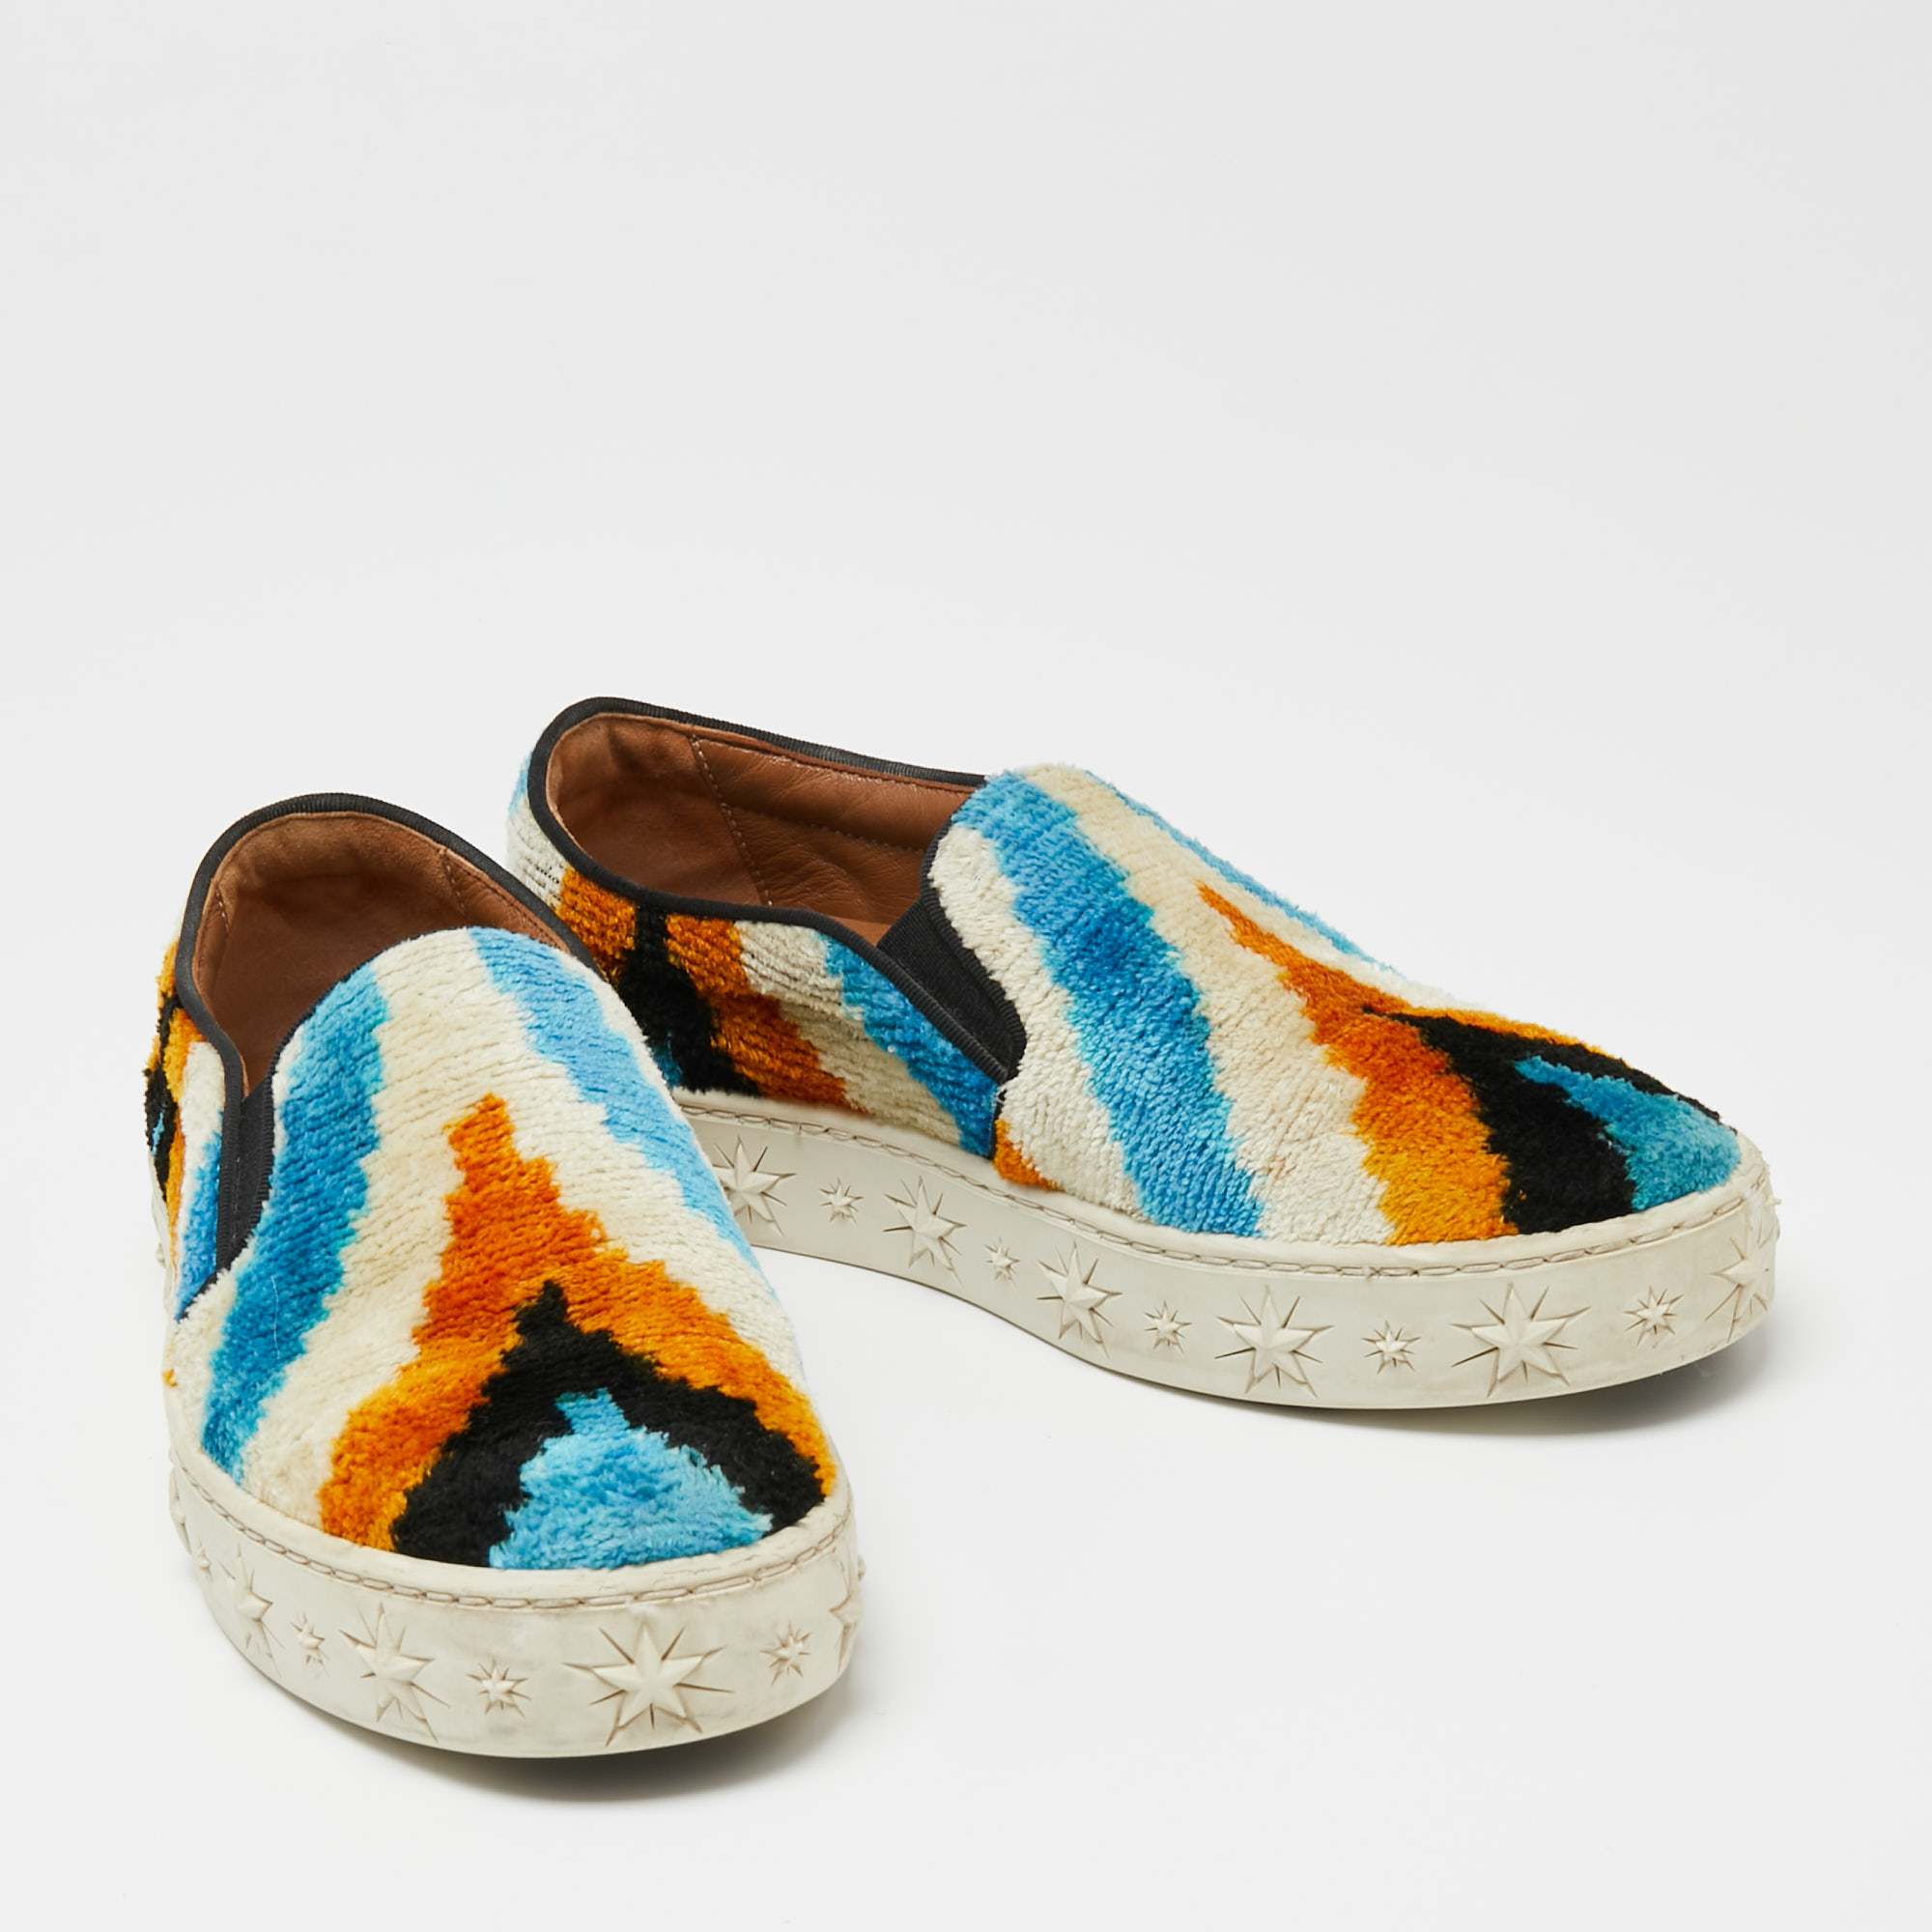 Aquazzura Multicolor Velvet Slip On Sneakers Size 35.5